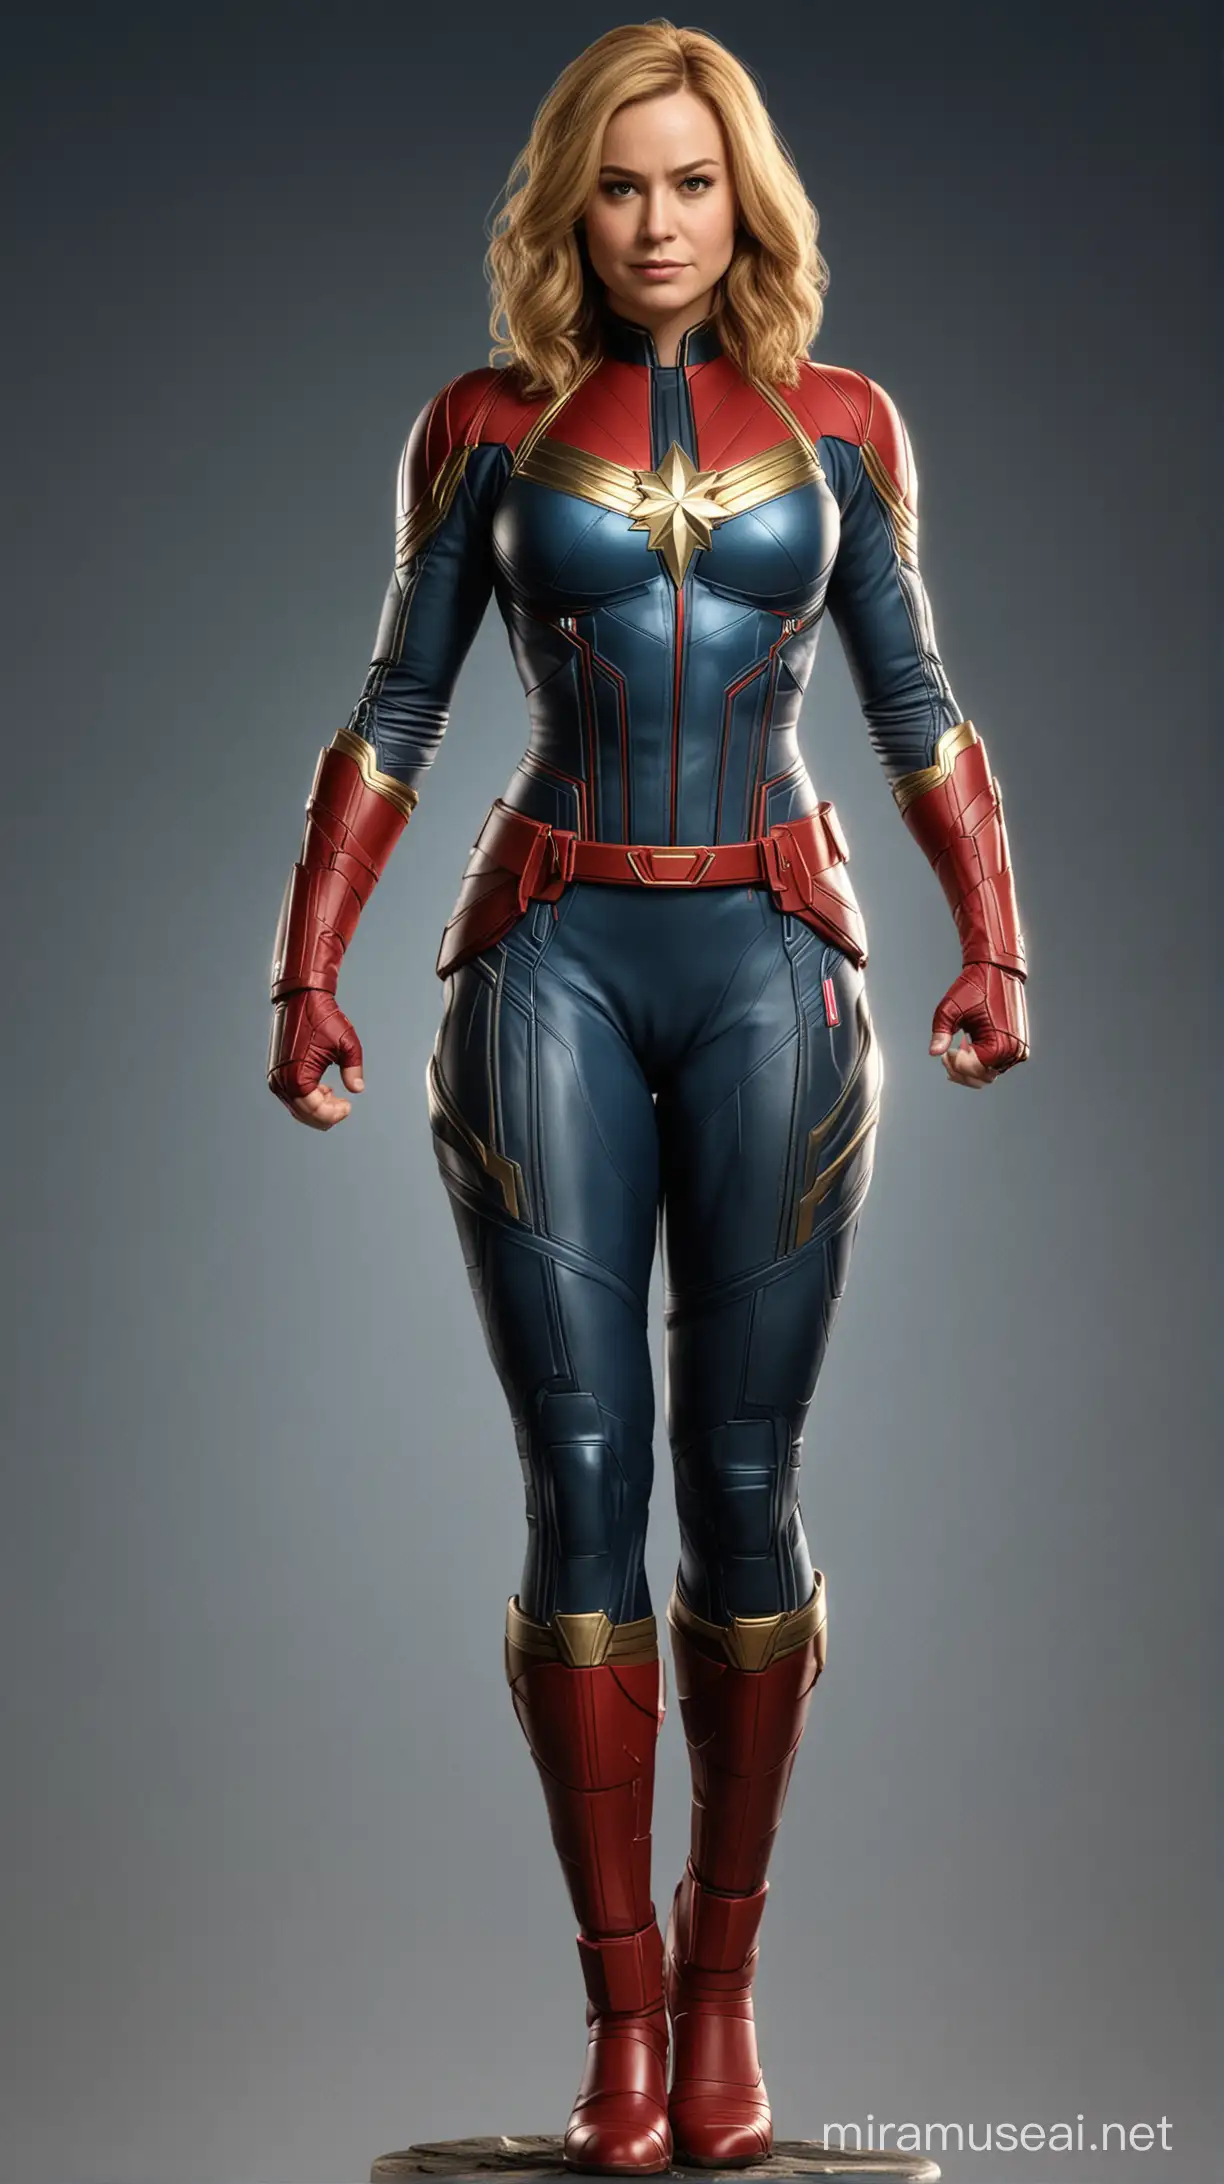 Powerful Heroine Curvy Captain Marvel in Full Frontal Stance